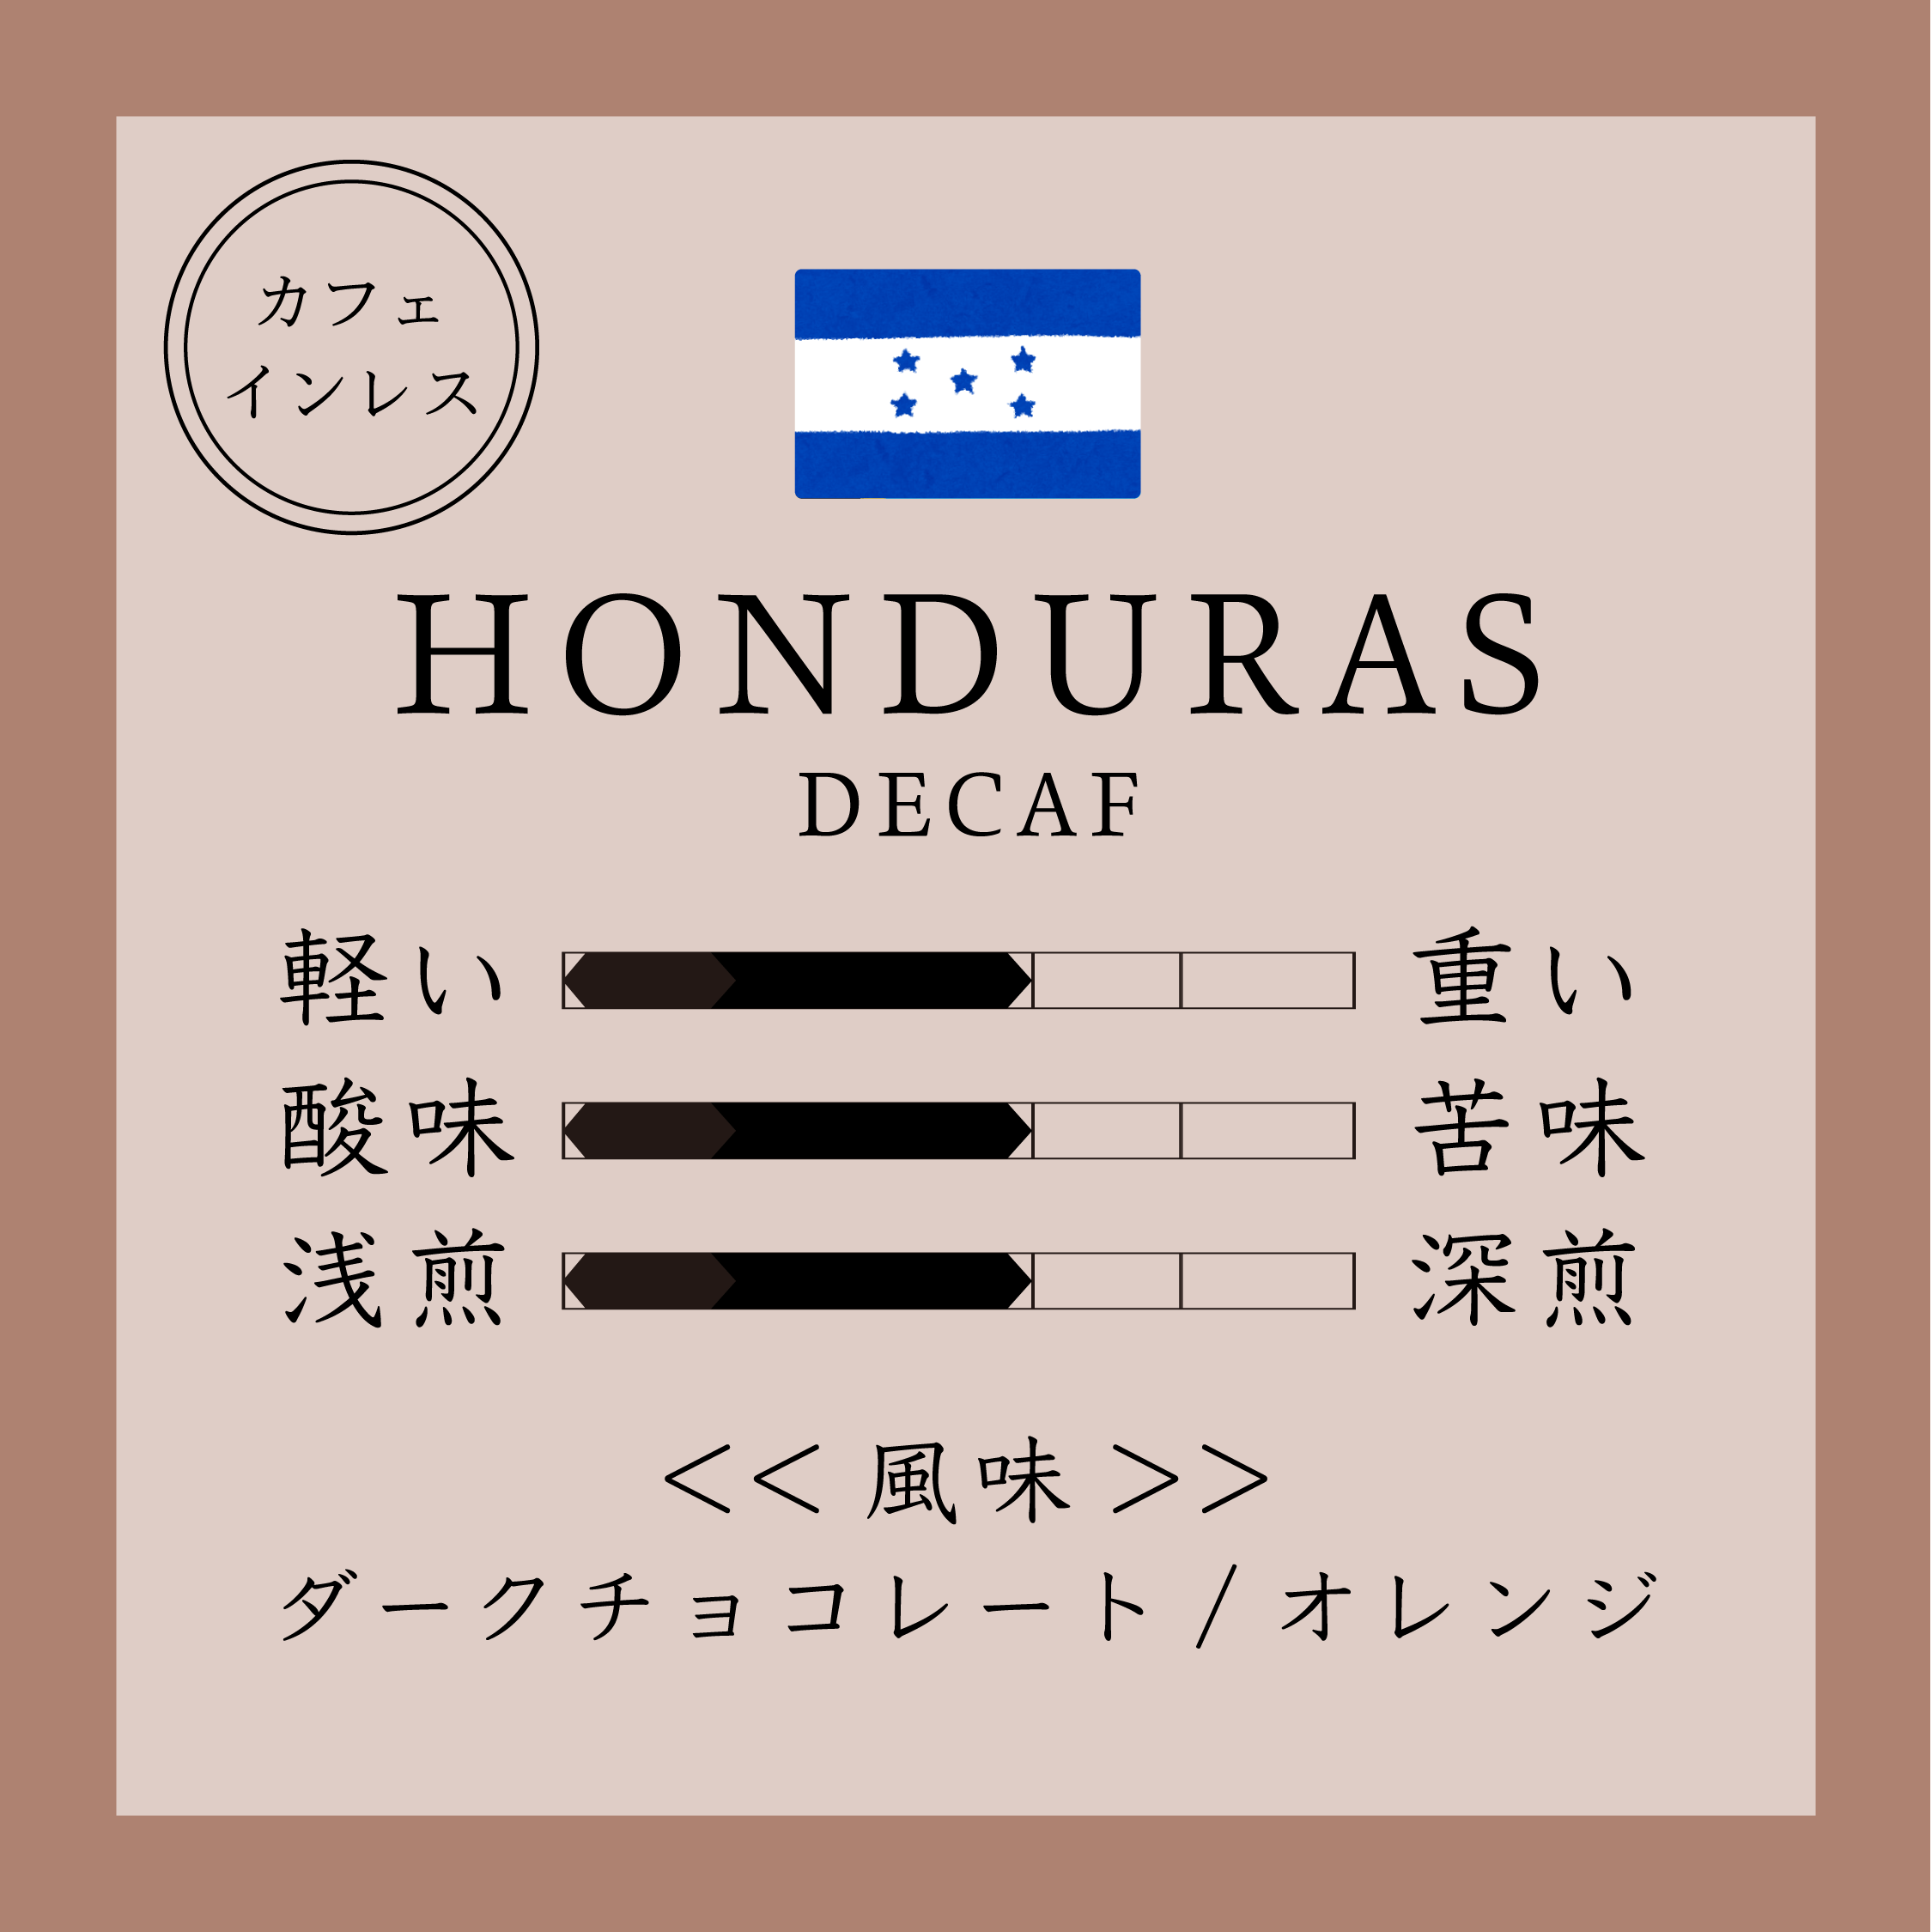 Decaf Honduras 150g